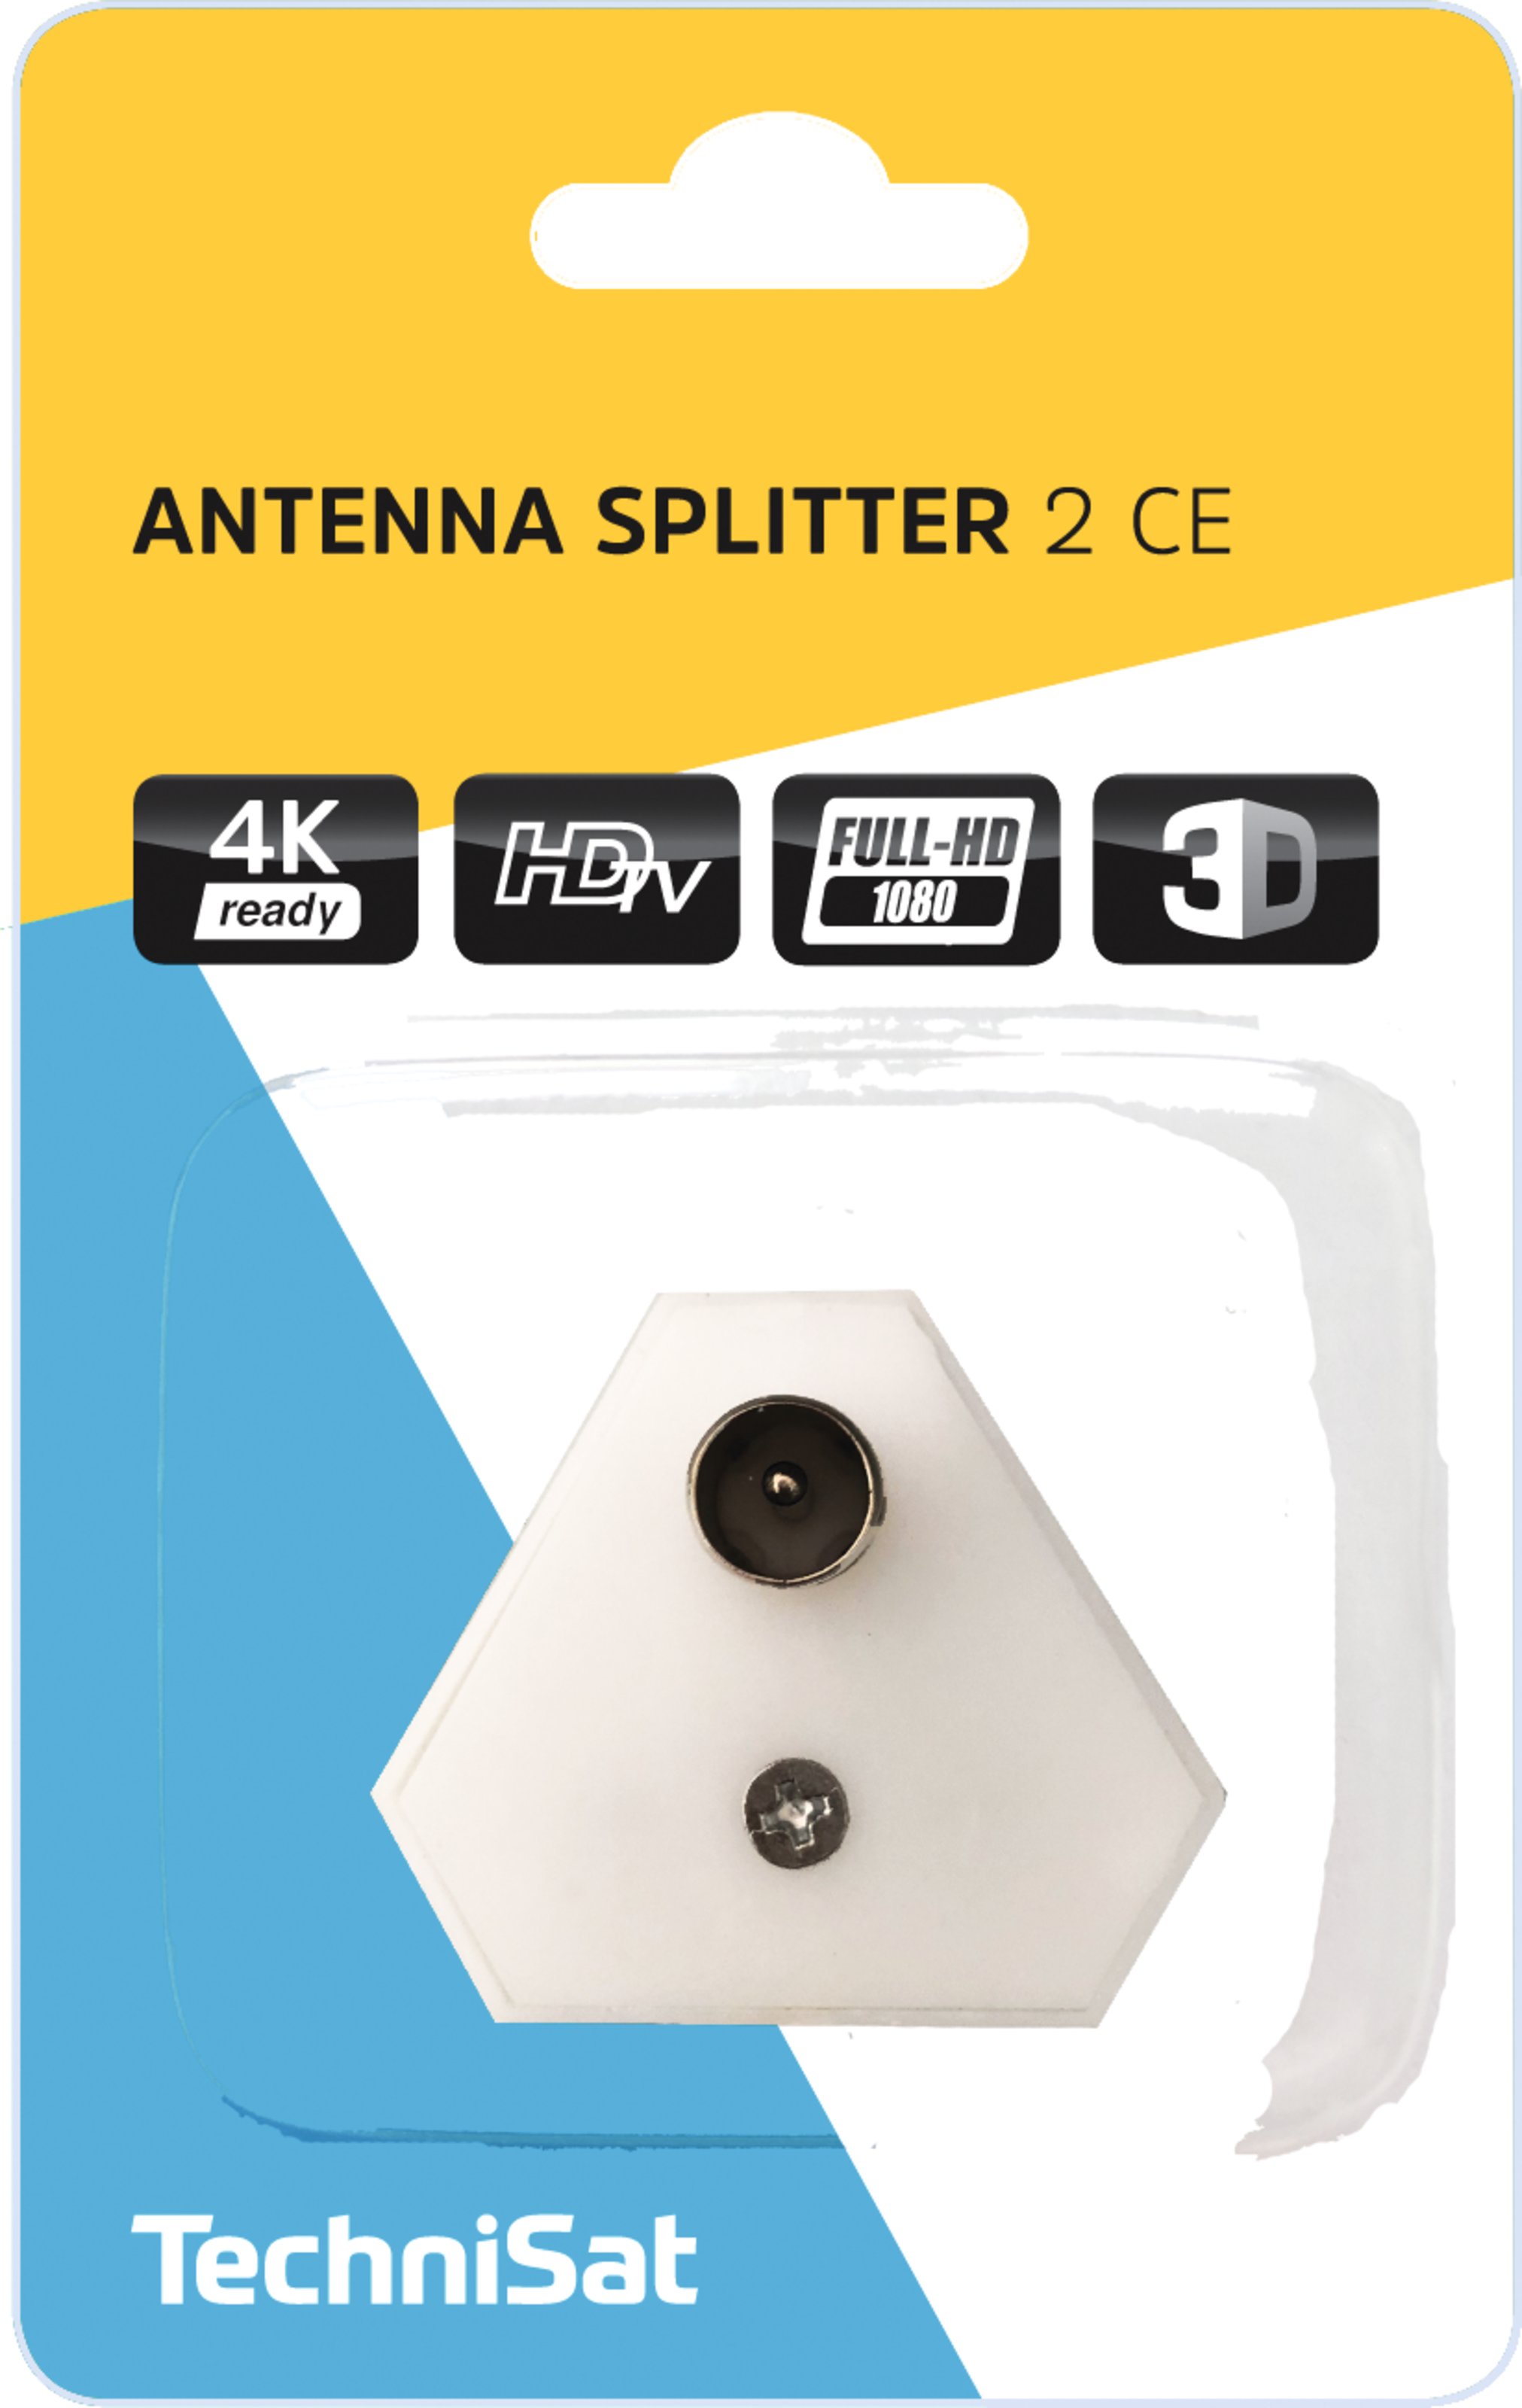 Antenna Splitter 2 CE